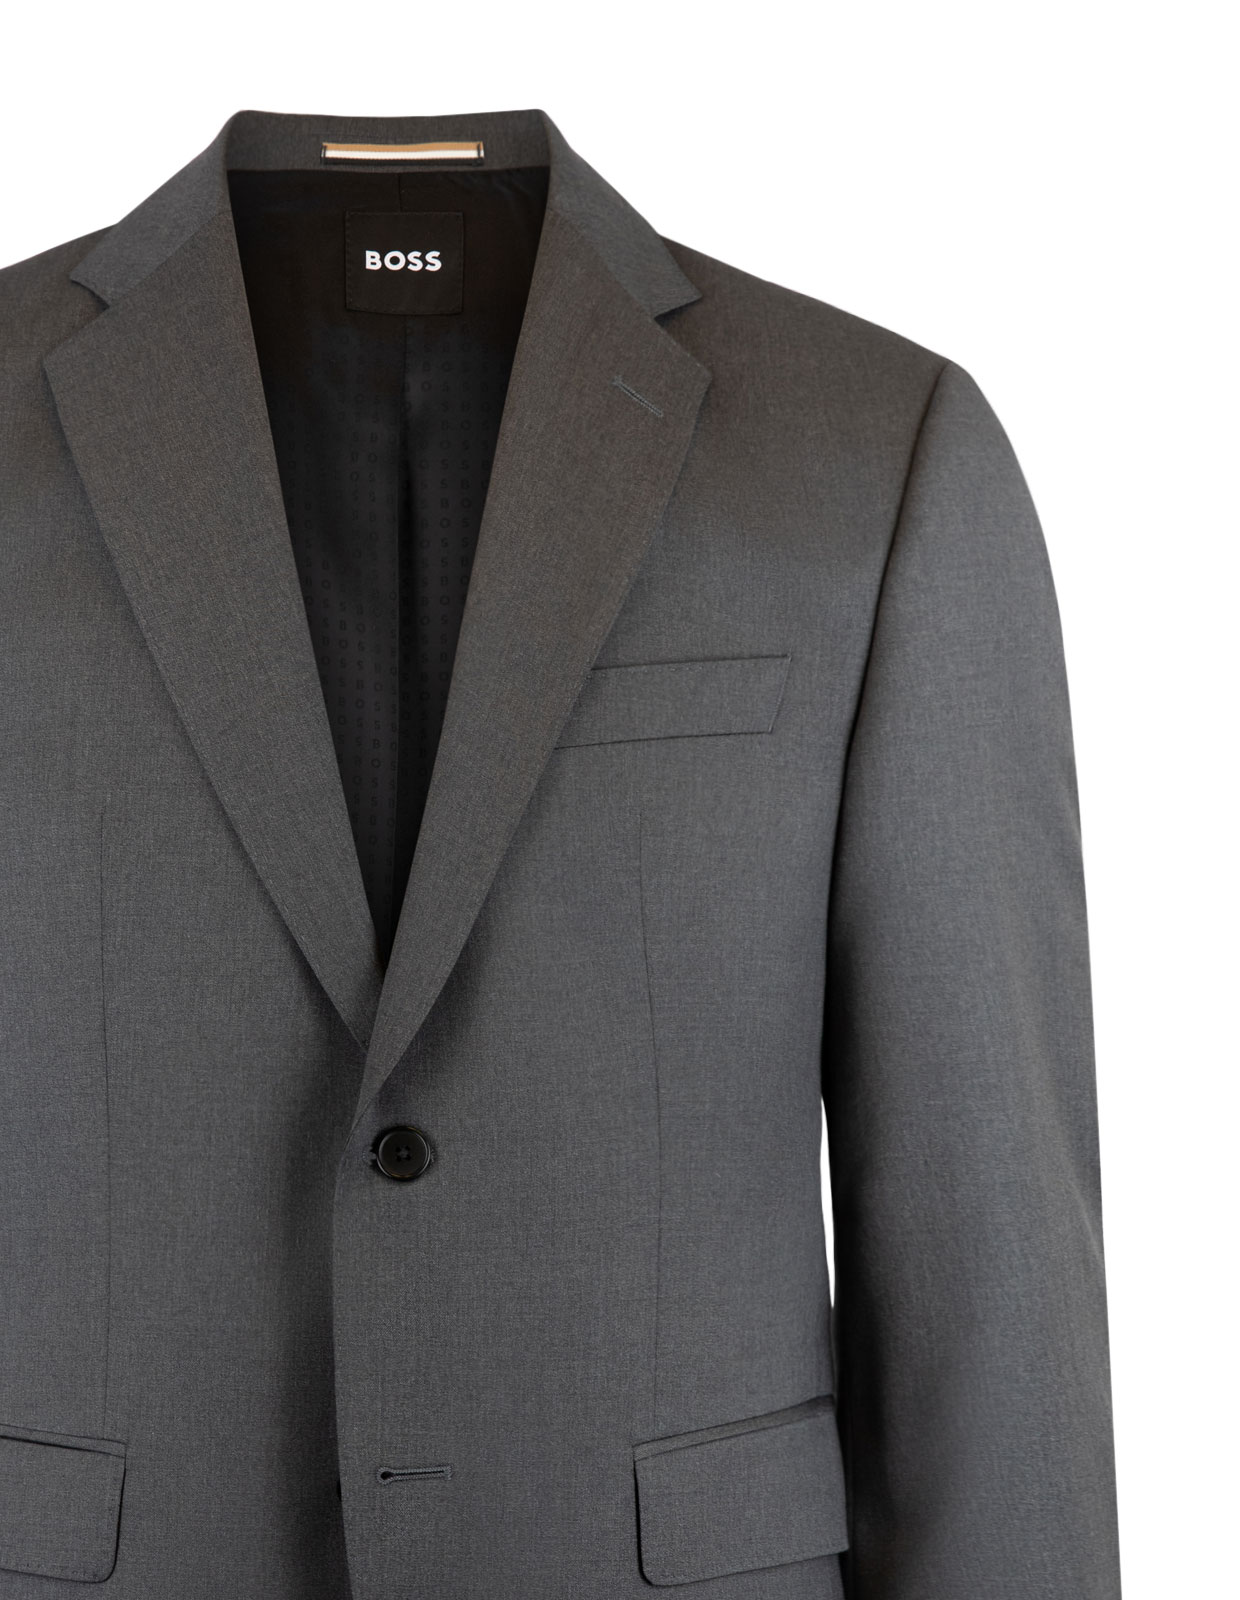 H-Jeckson Suit Jacket Regular Fit Mix & Match Grey Stl 104